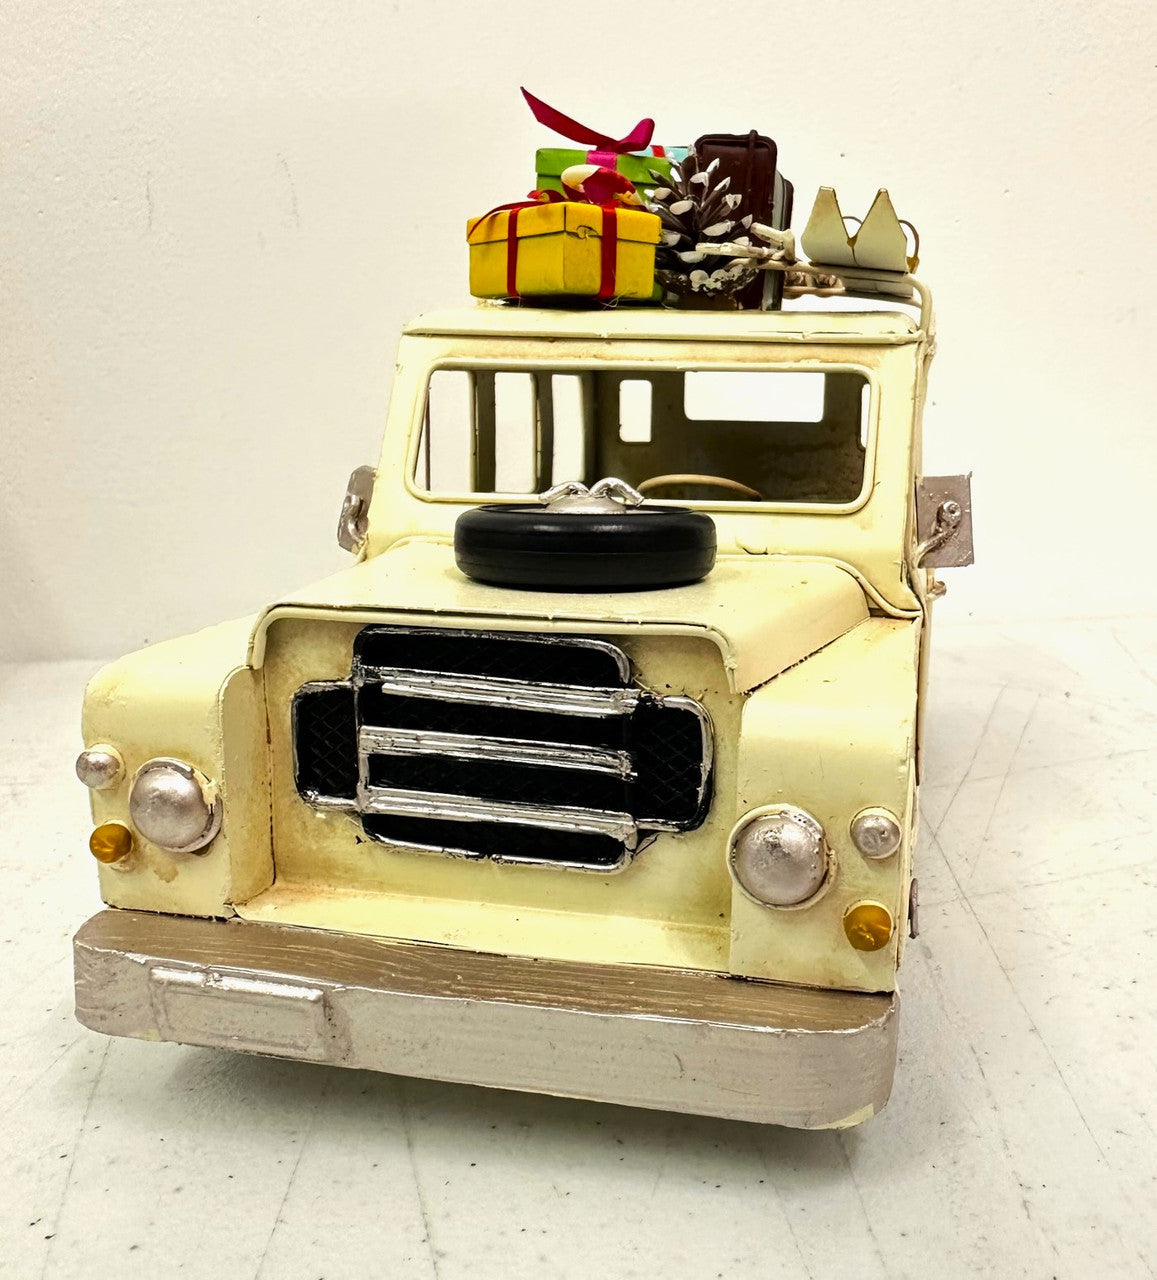 Australian Christmas Metal Wagon, Red Ute and Caravan Ornaments